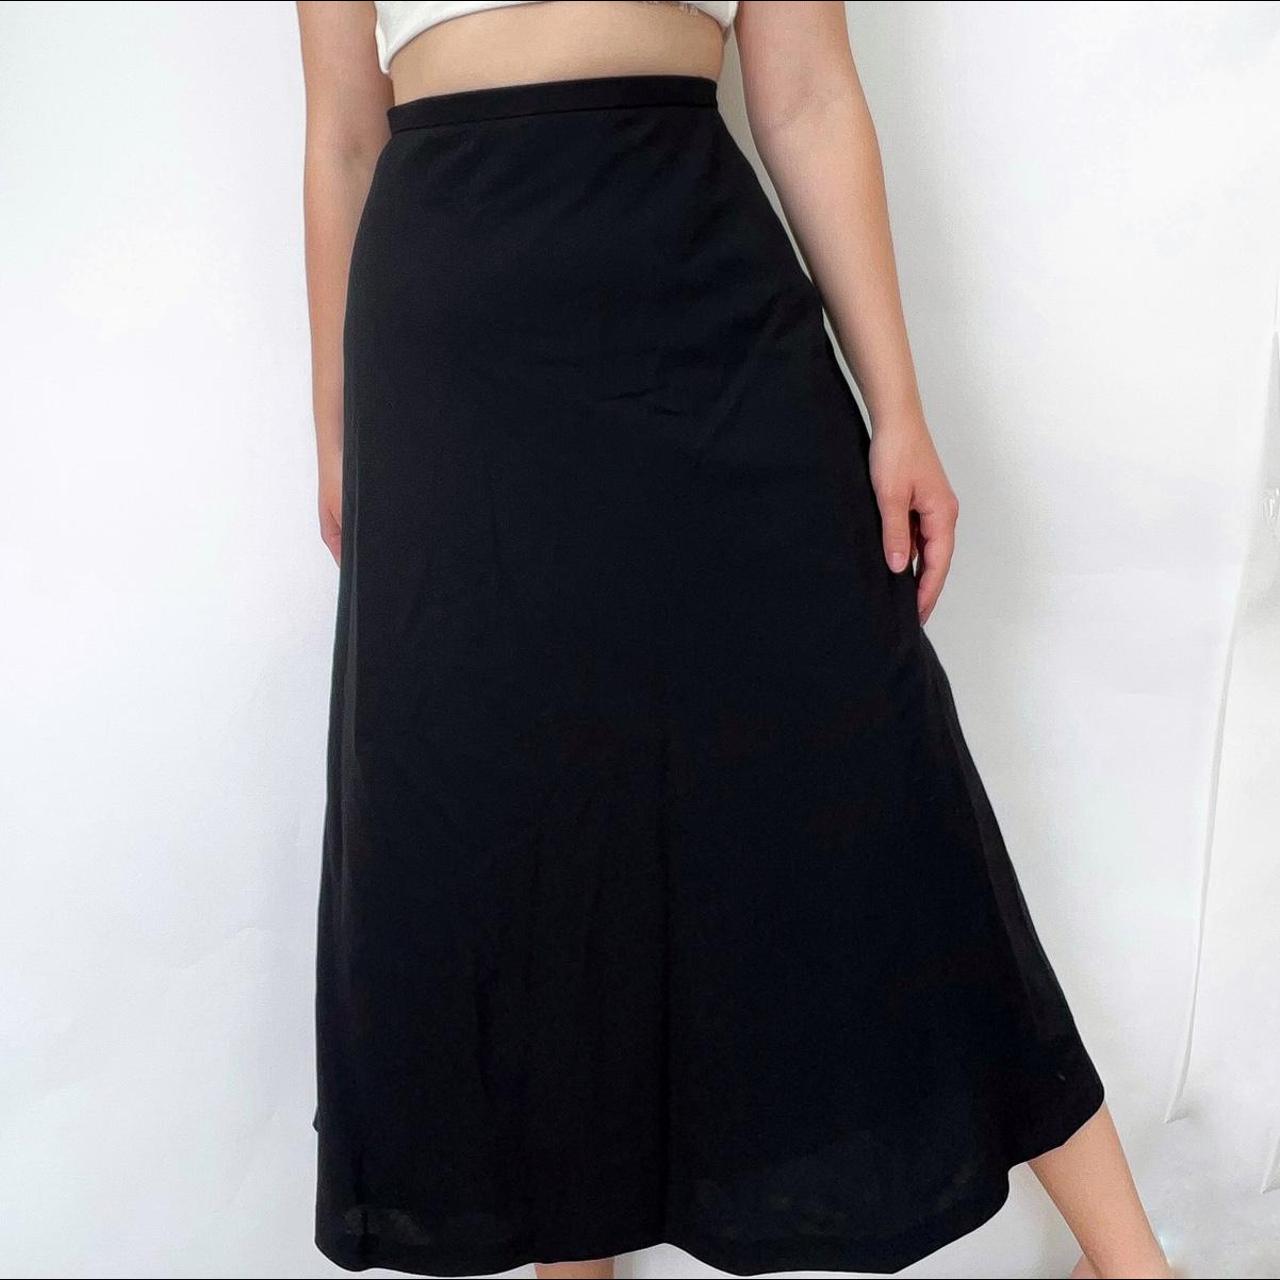 Product Image 1 - Black Gothic Skirt

Vintage long maxi